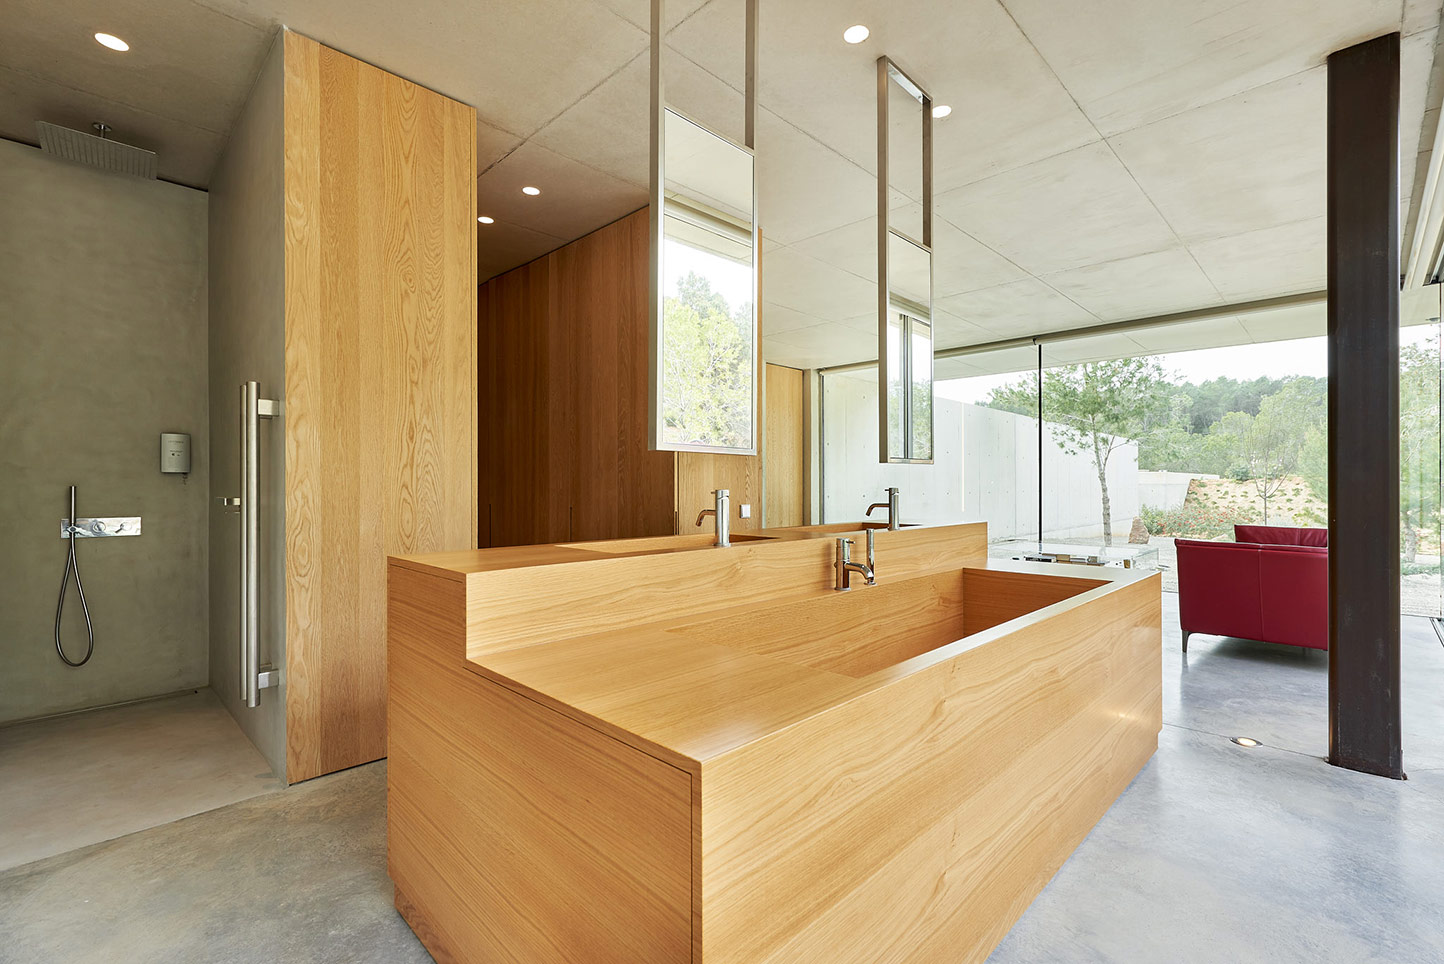 Image no. 1 of Custom wooden bathtub and vanity in Oak - Bathroom Island